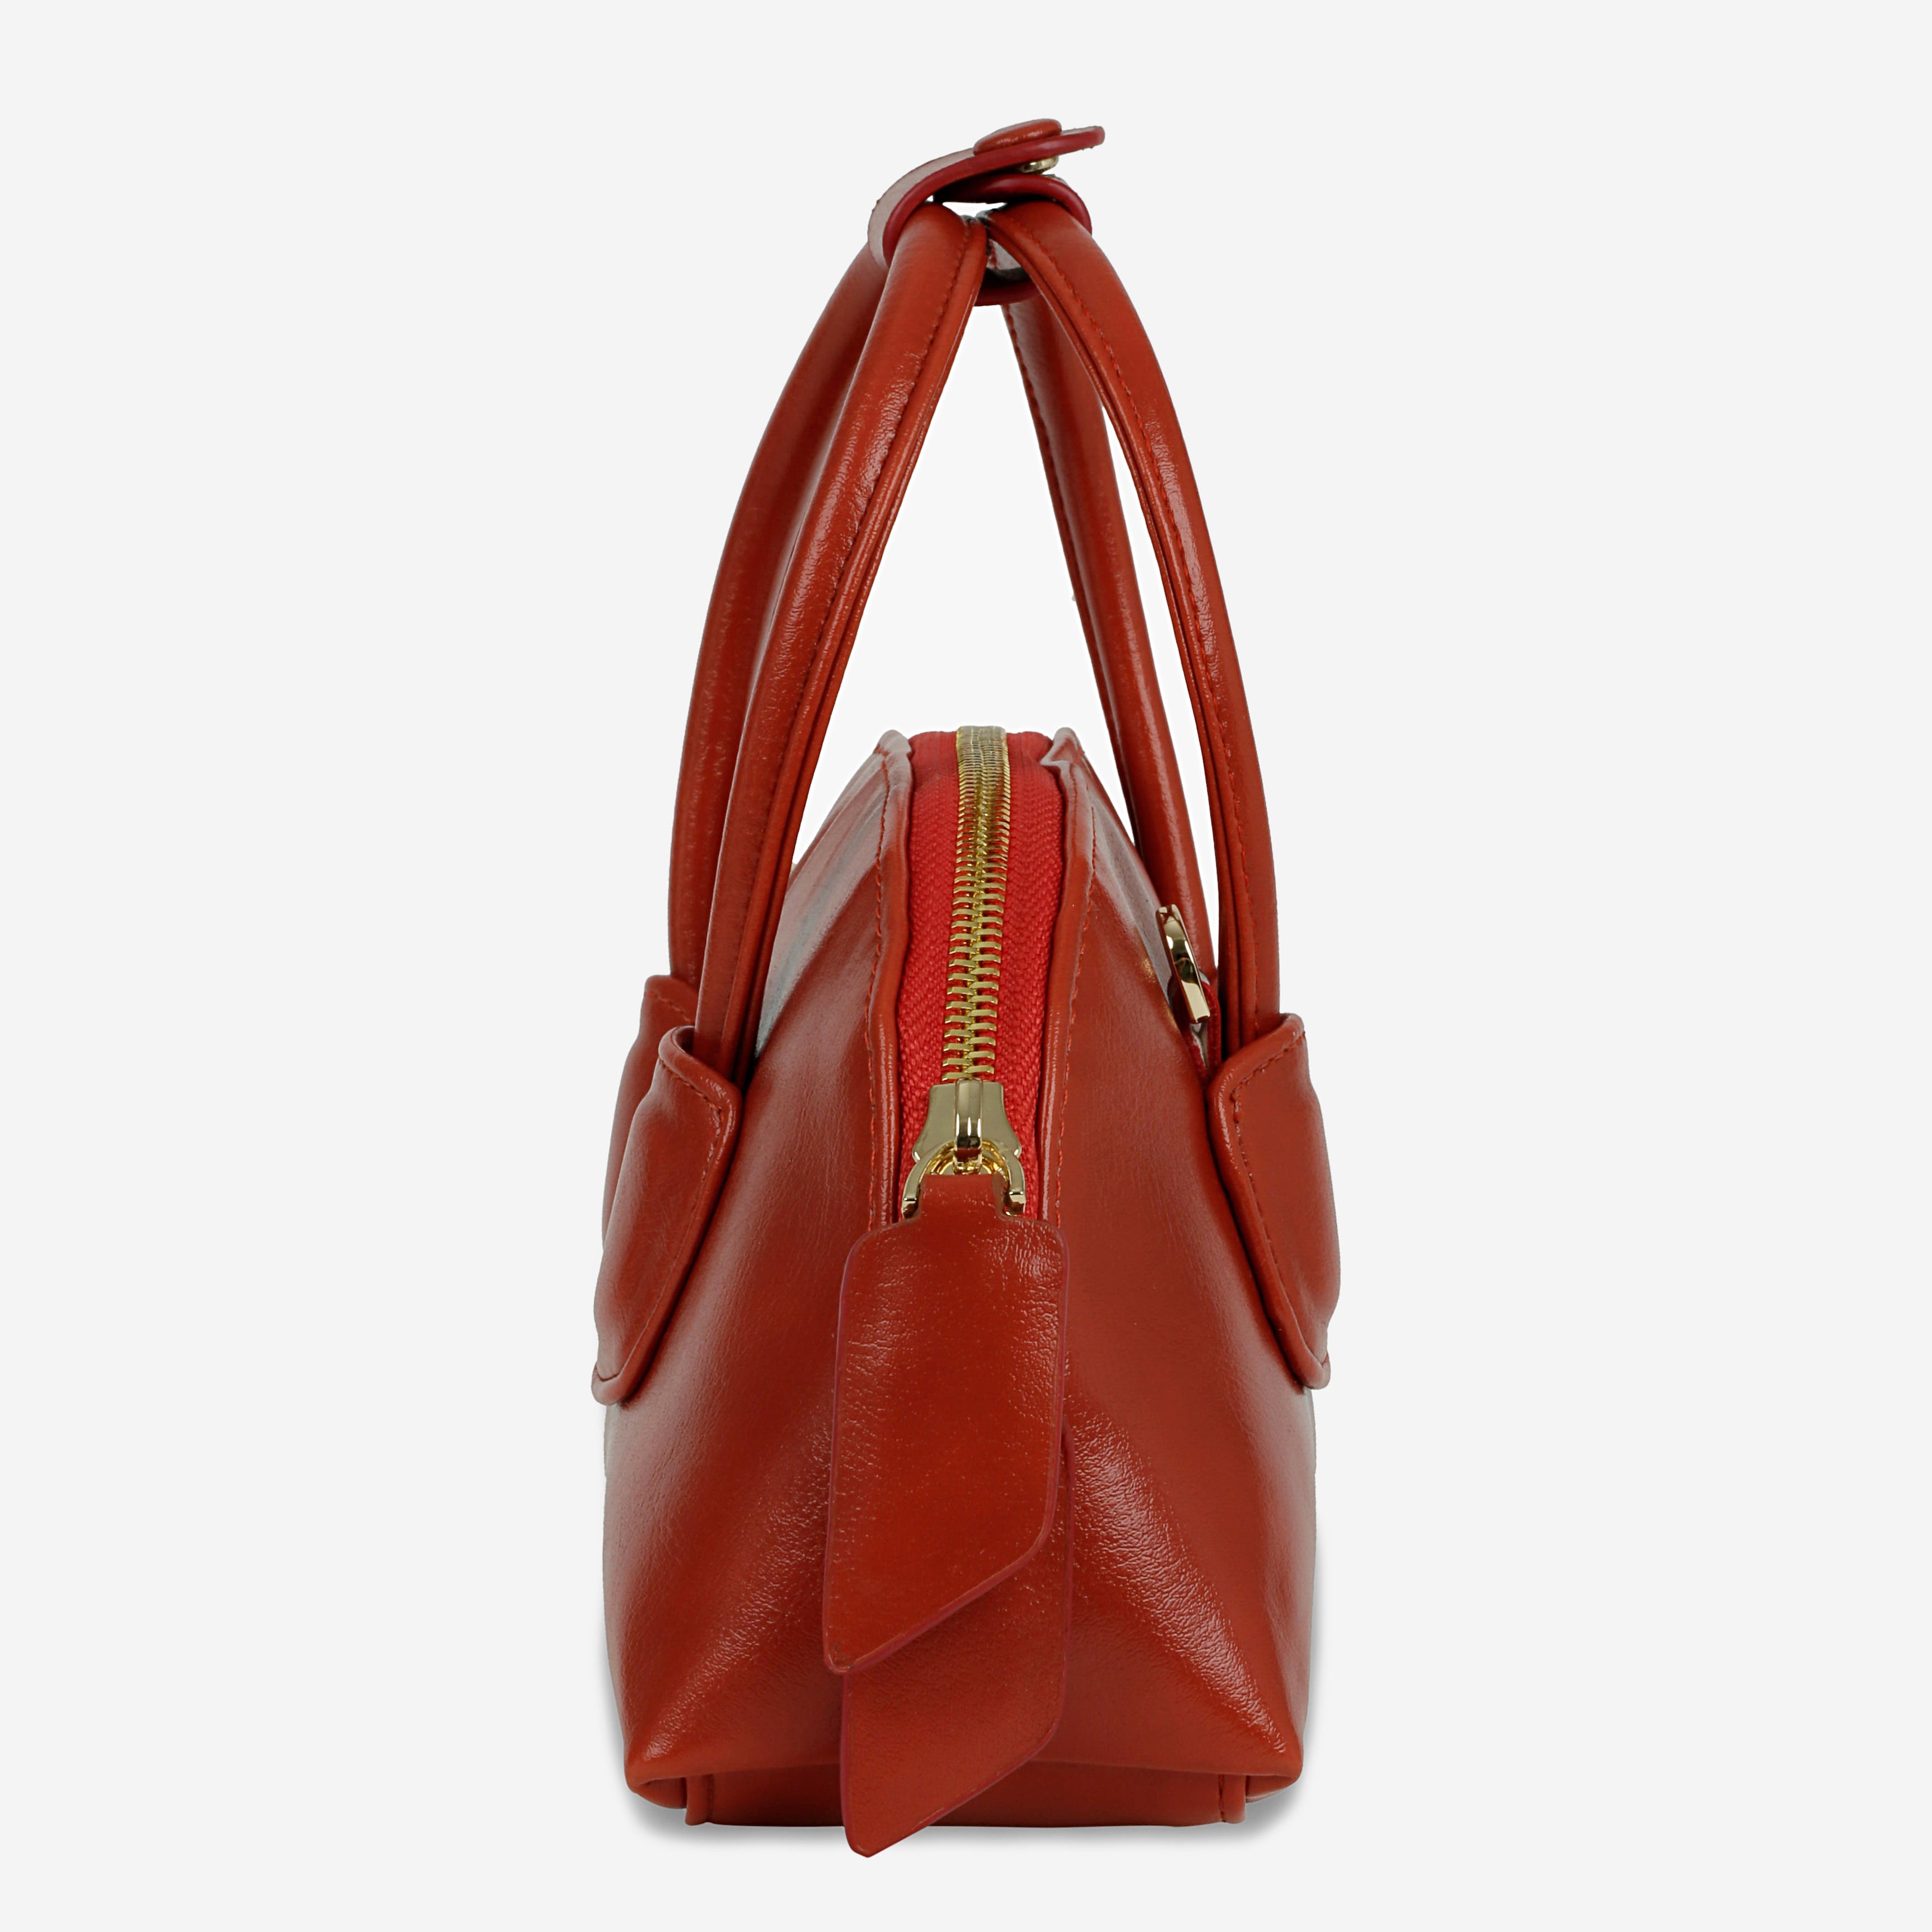 Small red TACOS handbag (S)